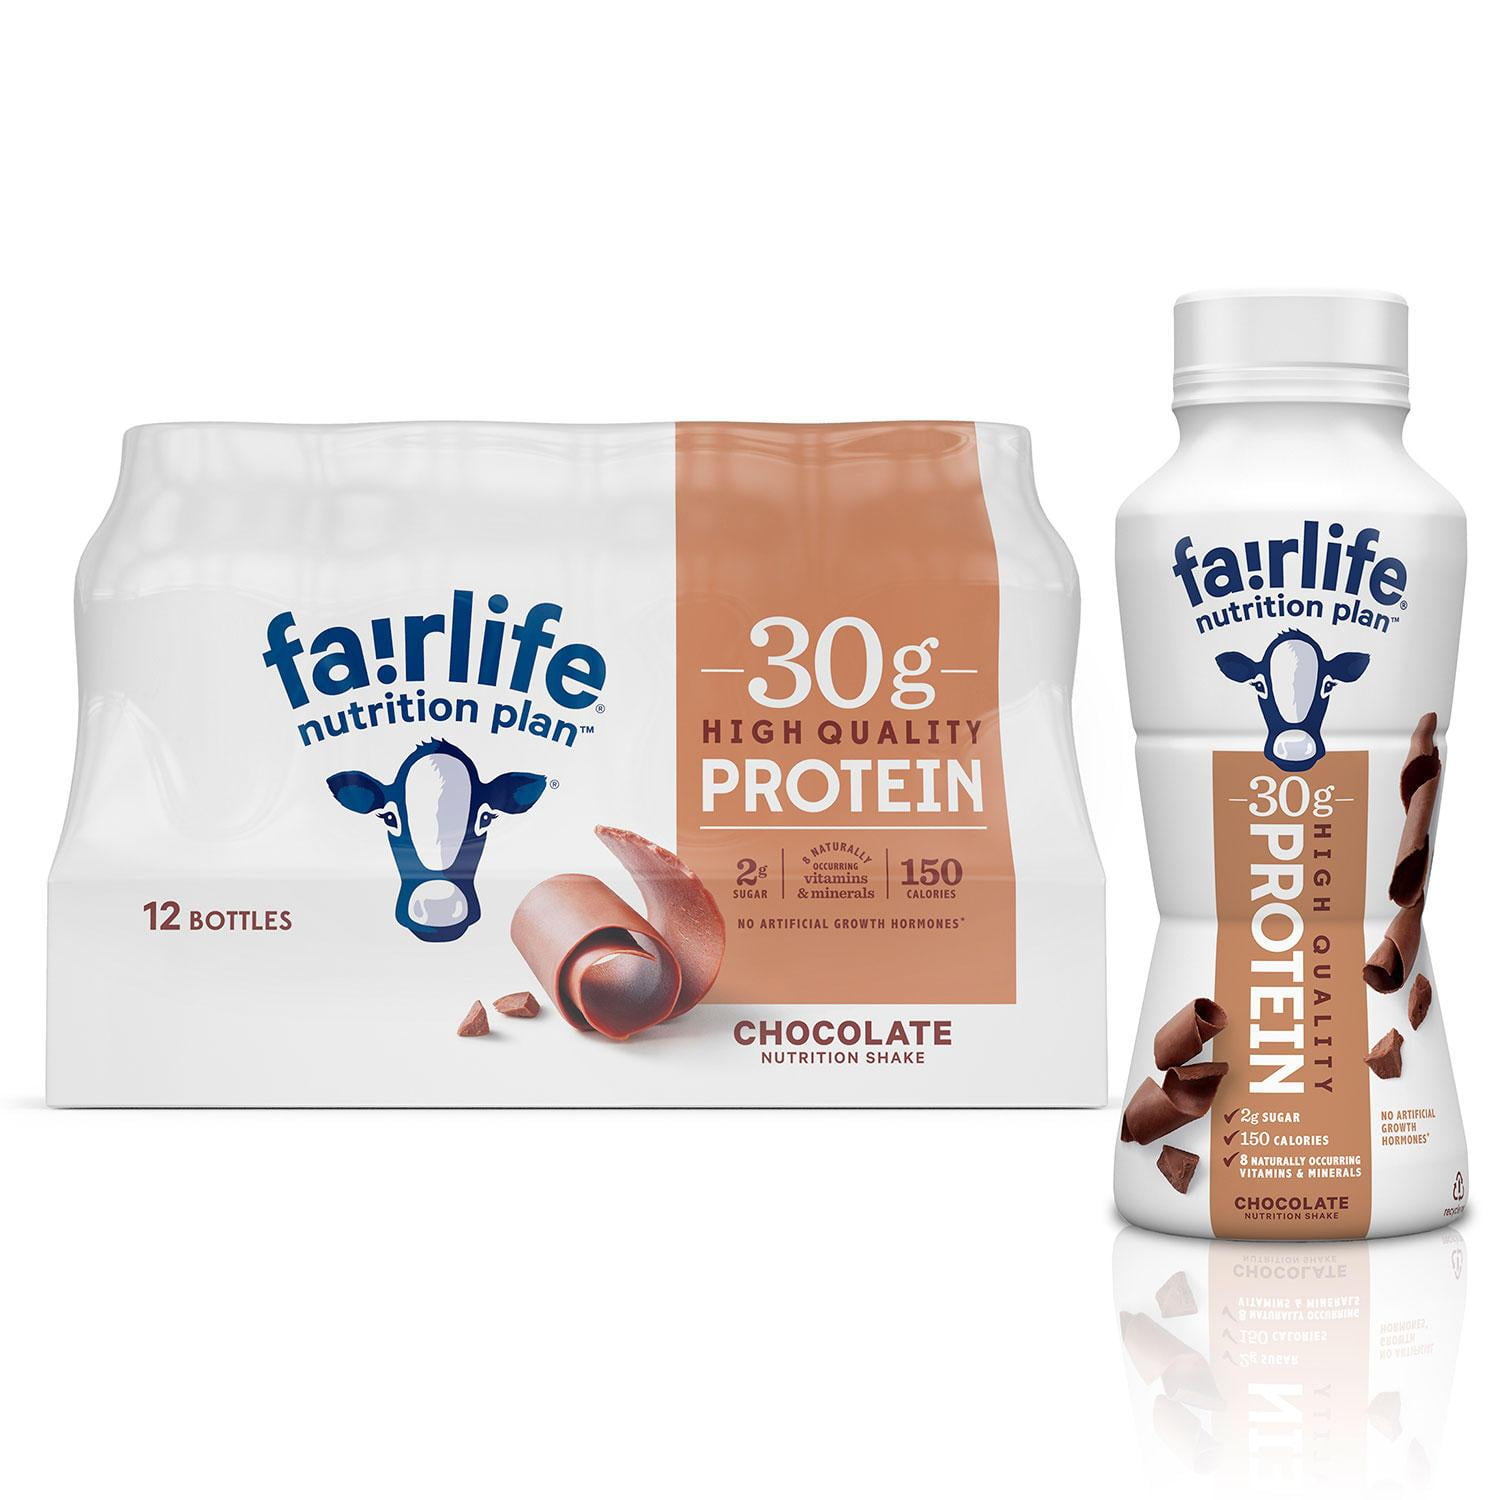 Fairlife Nutrition Plan Chocolate 30g Protein Shake 11 5 fl oz 12 Pack Walmart com